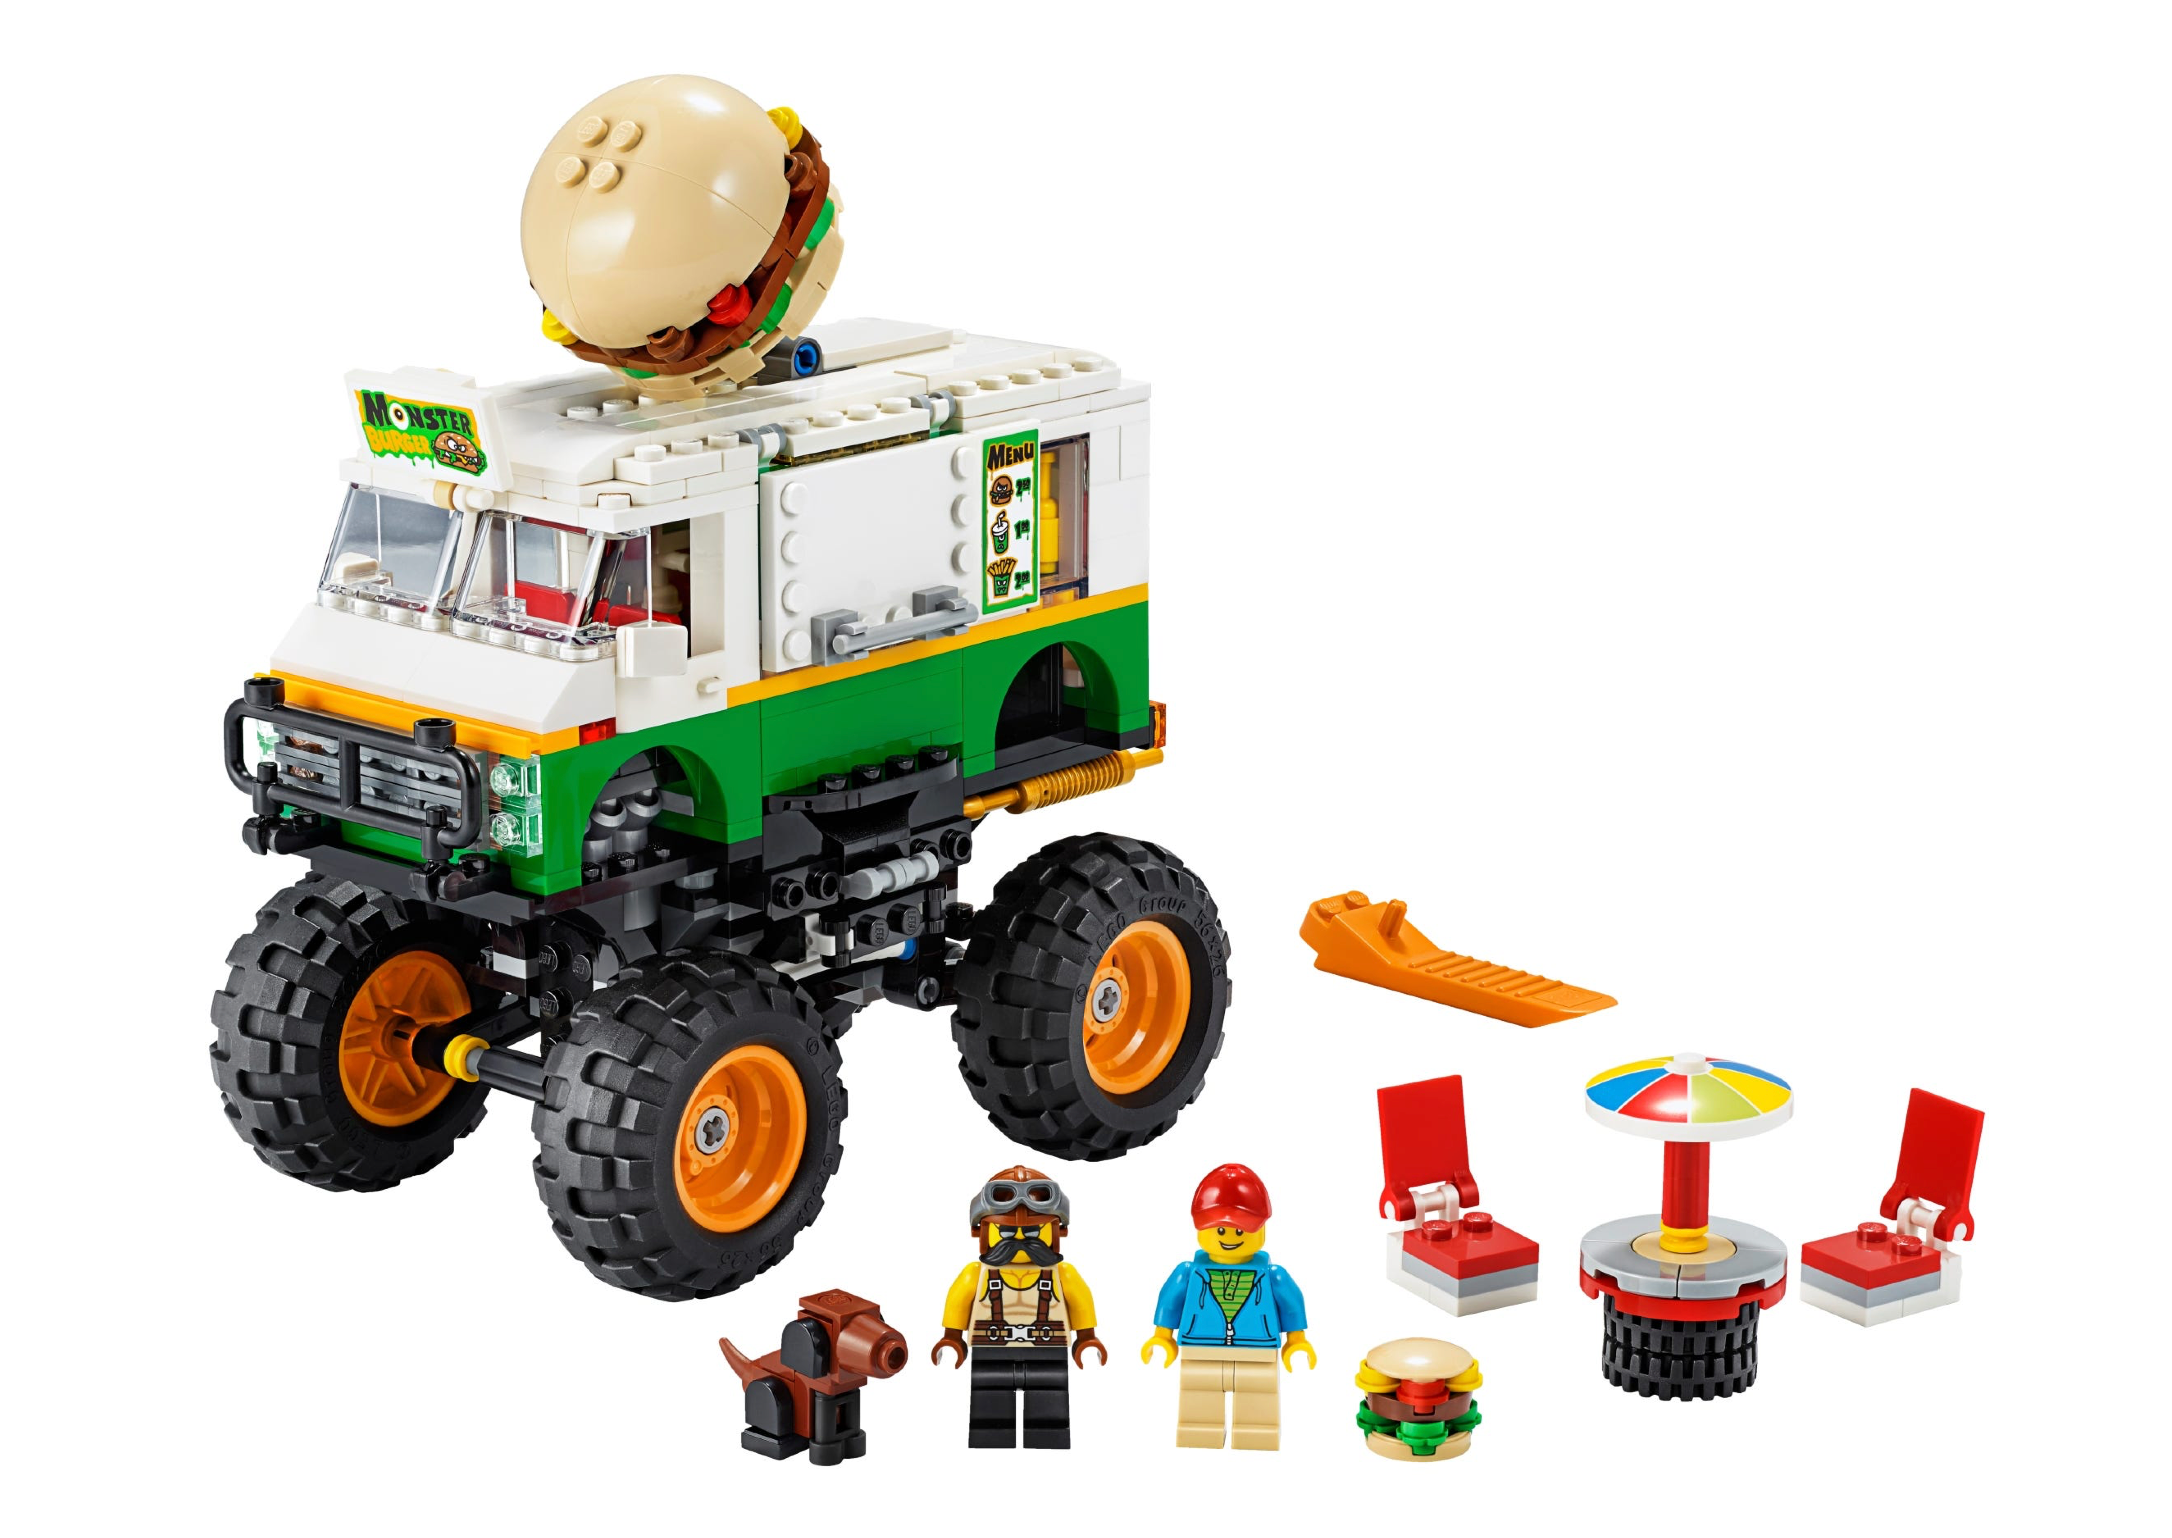 LEGO: Creator - Monster Burger Truck